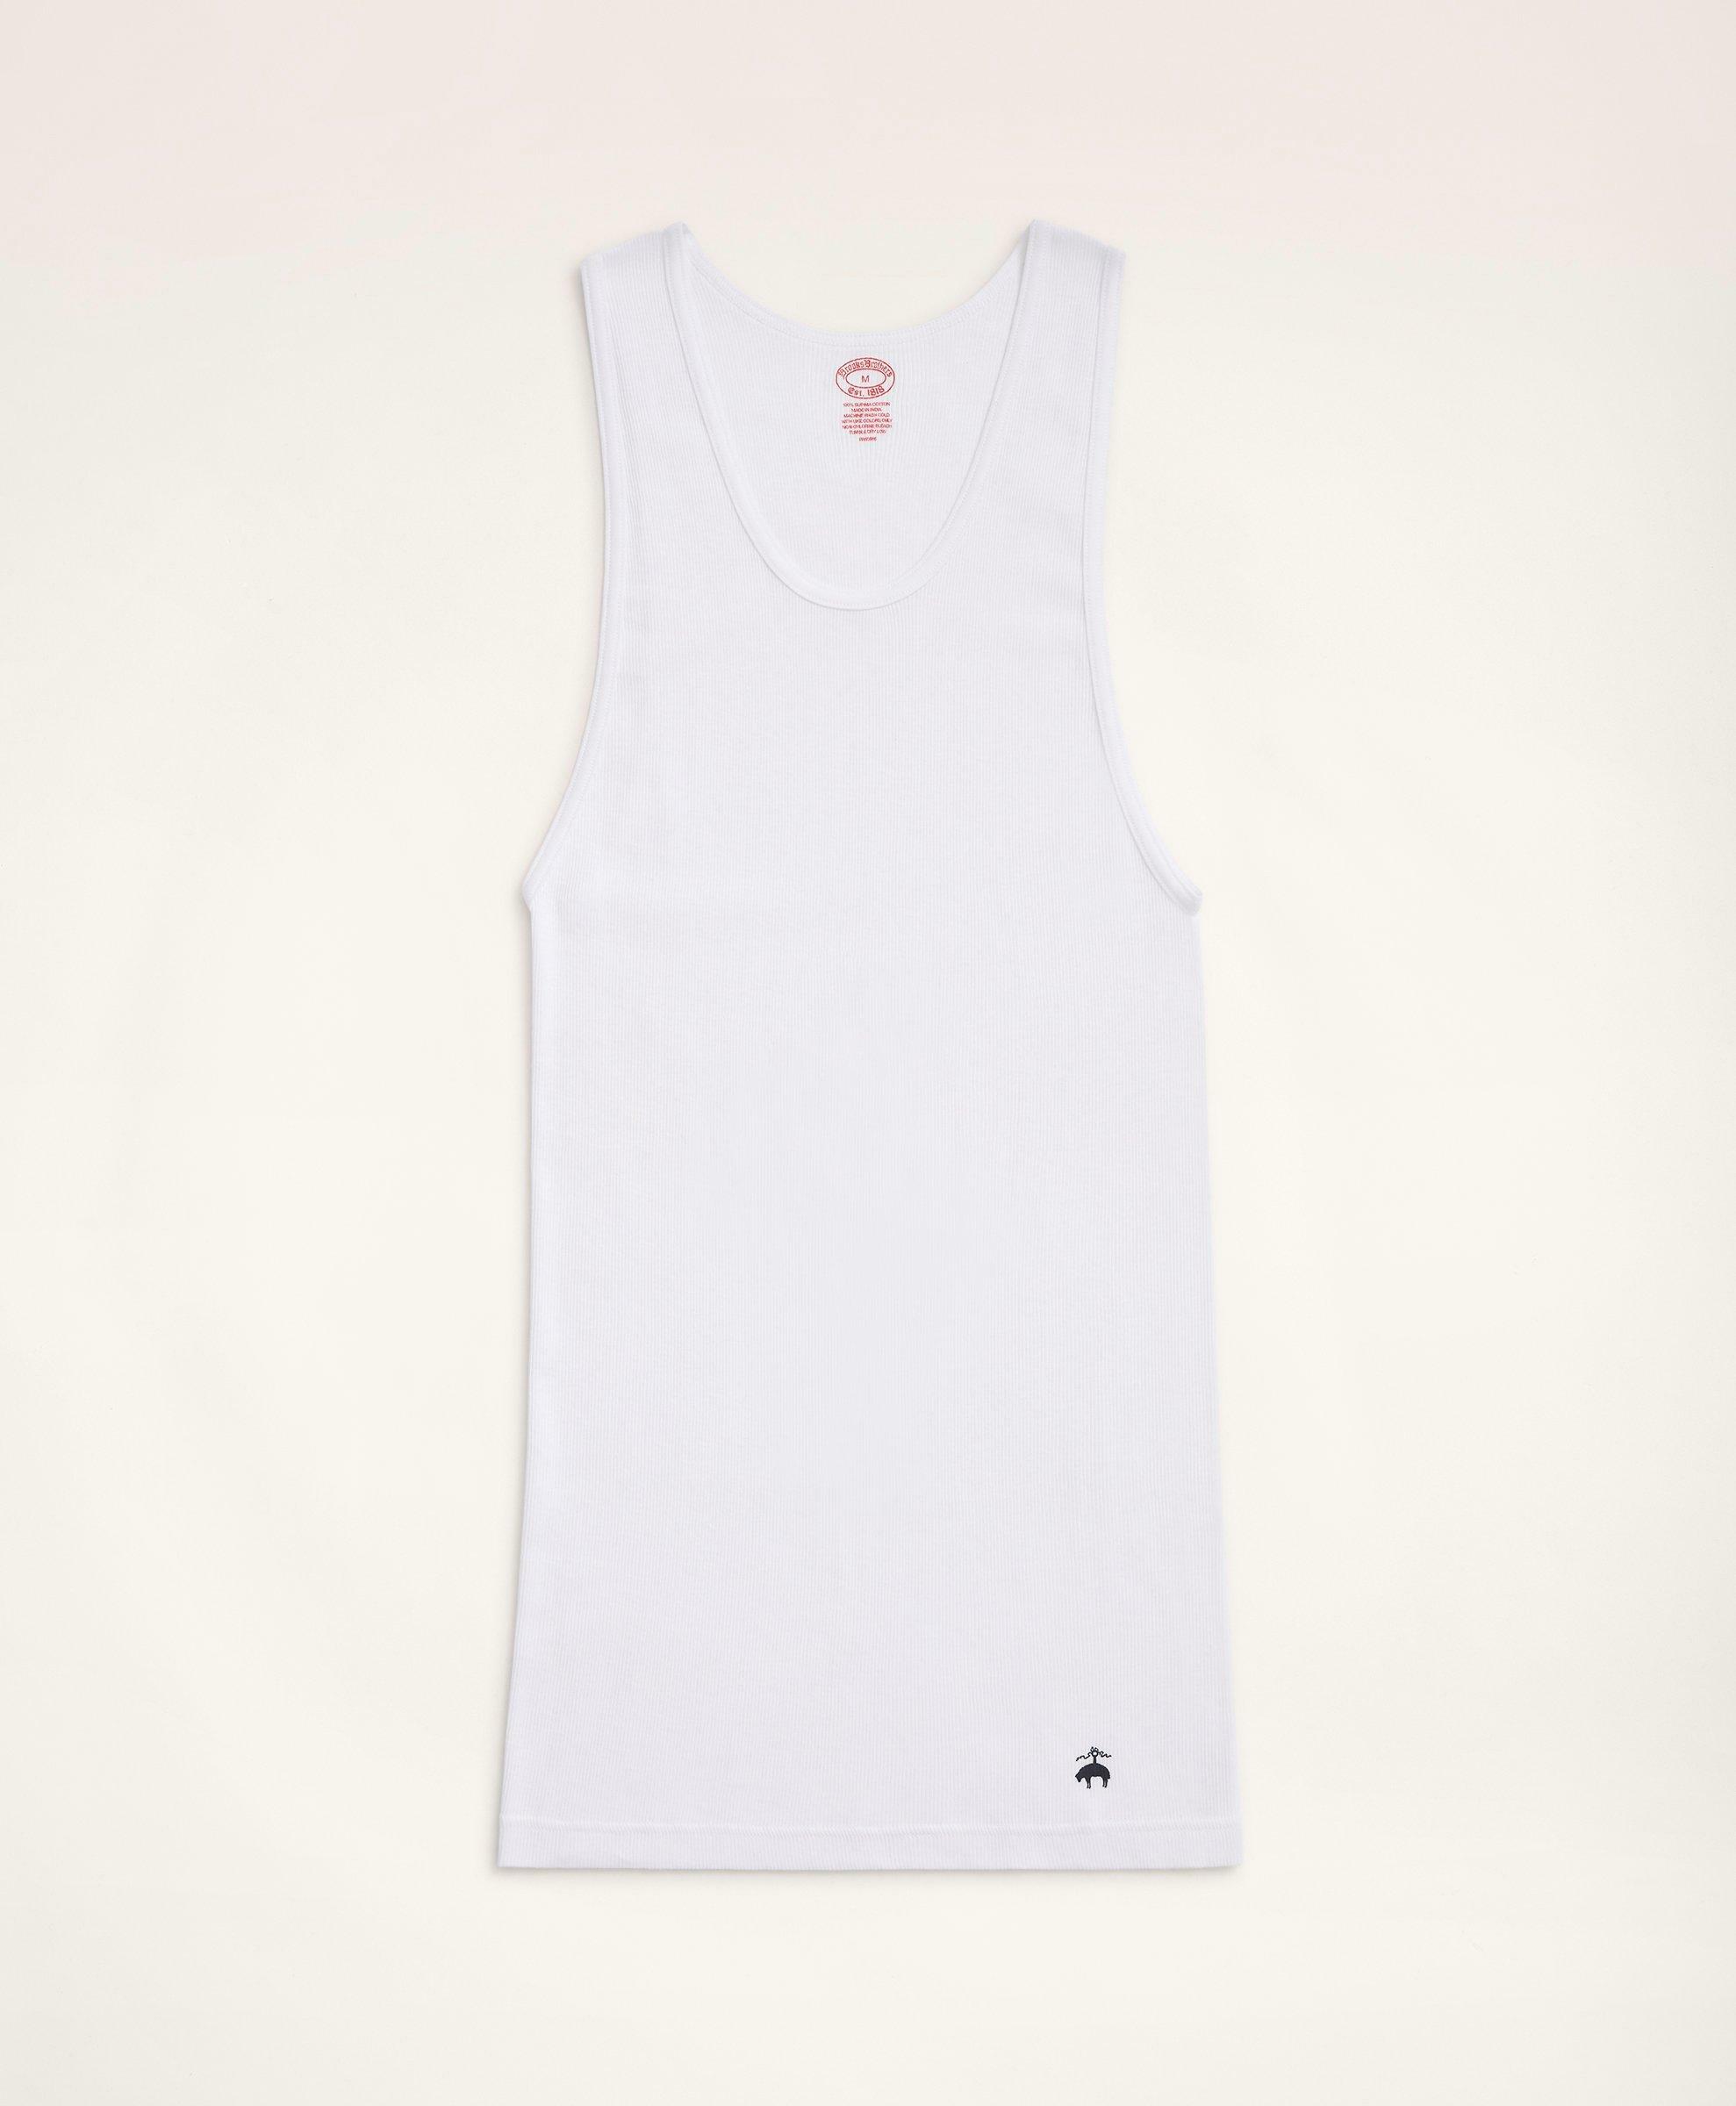 Brooks Brothers Men's Supima Cotton Athletic Undershirt-3 Pack | White